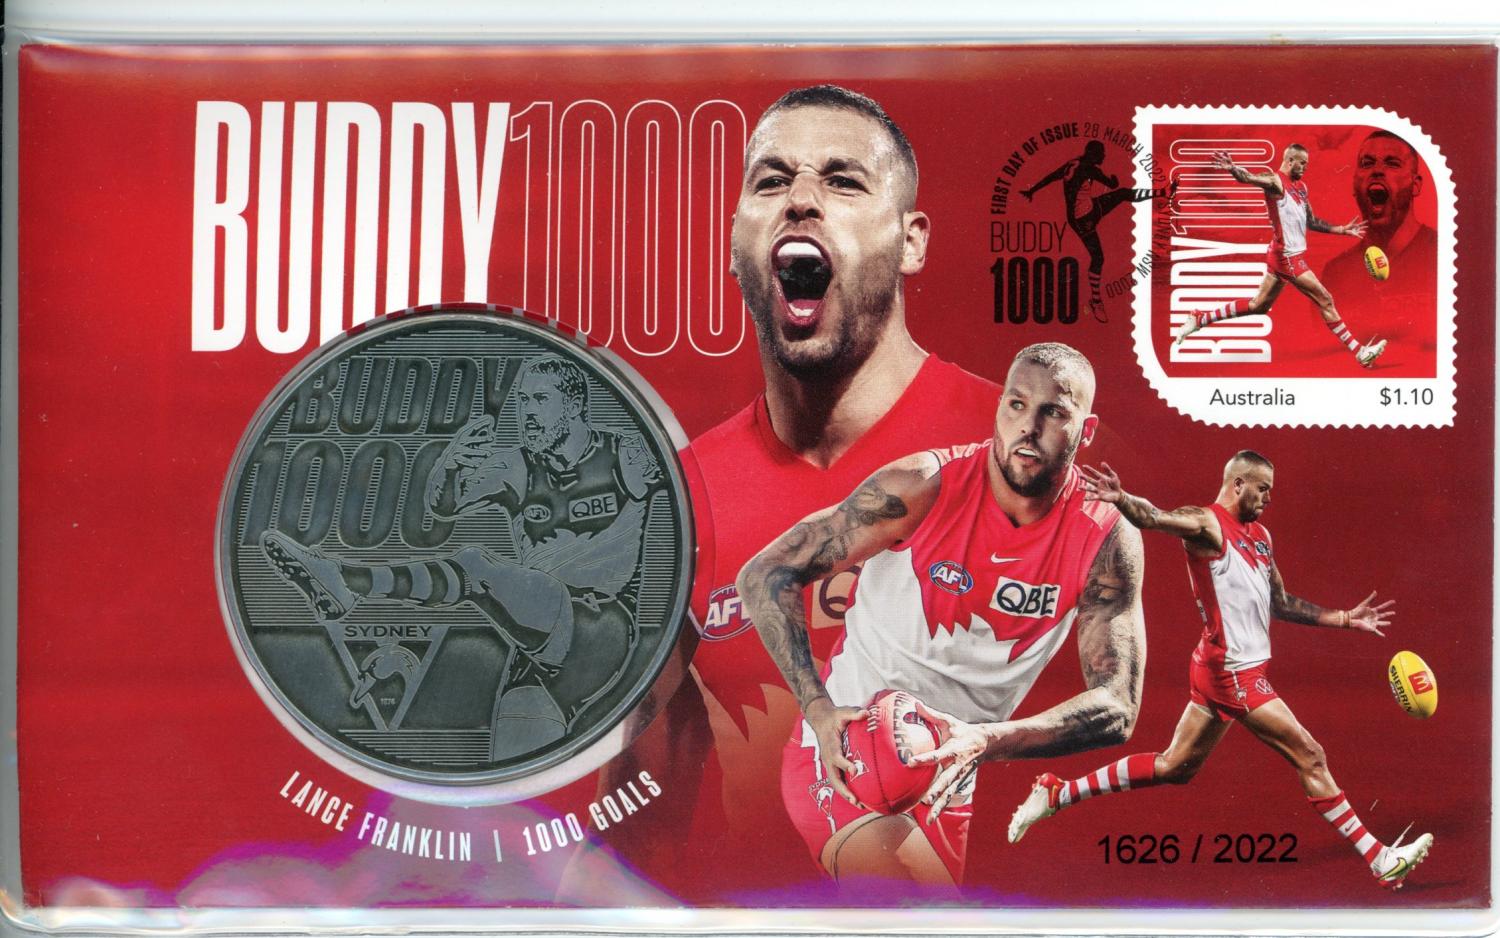 Thumbnail for 2022 Lance  Franklin 1000 Goals  - Buddy 1000 Goals Stamp & Medallion Cover